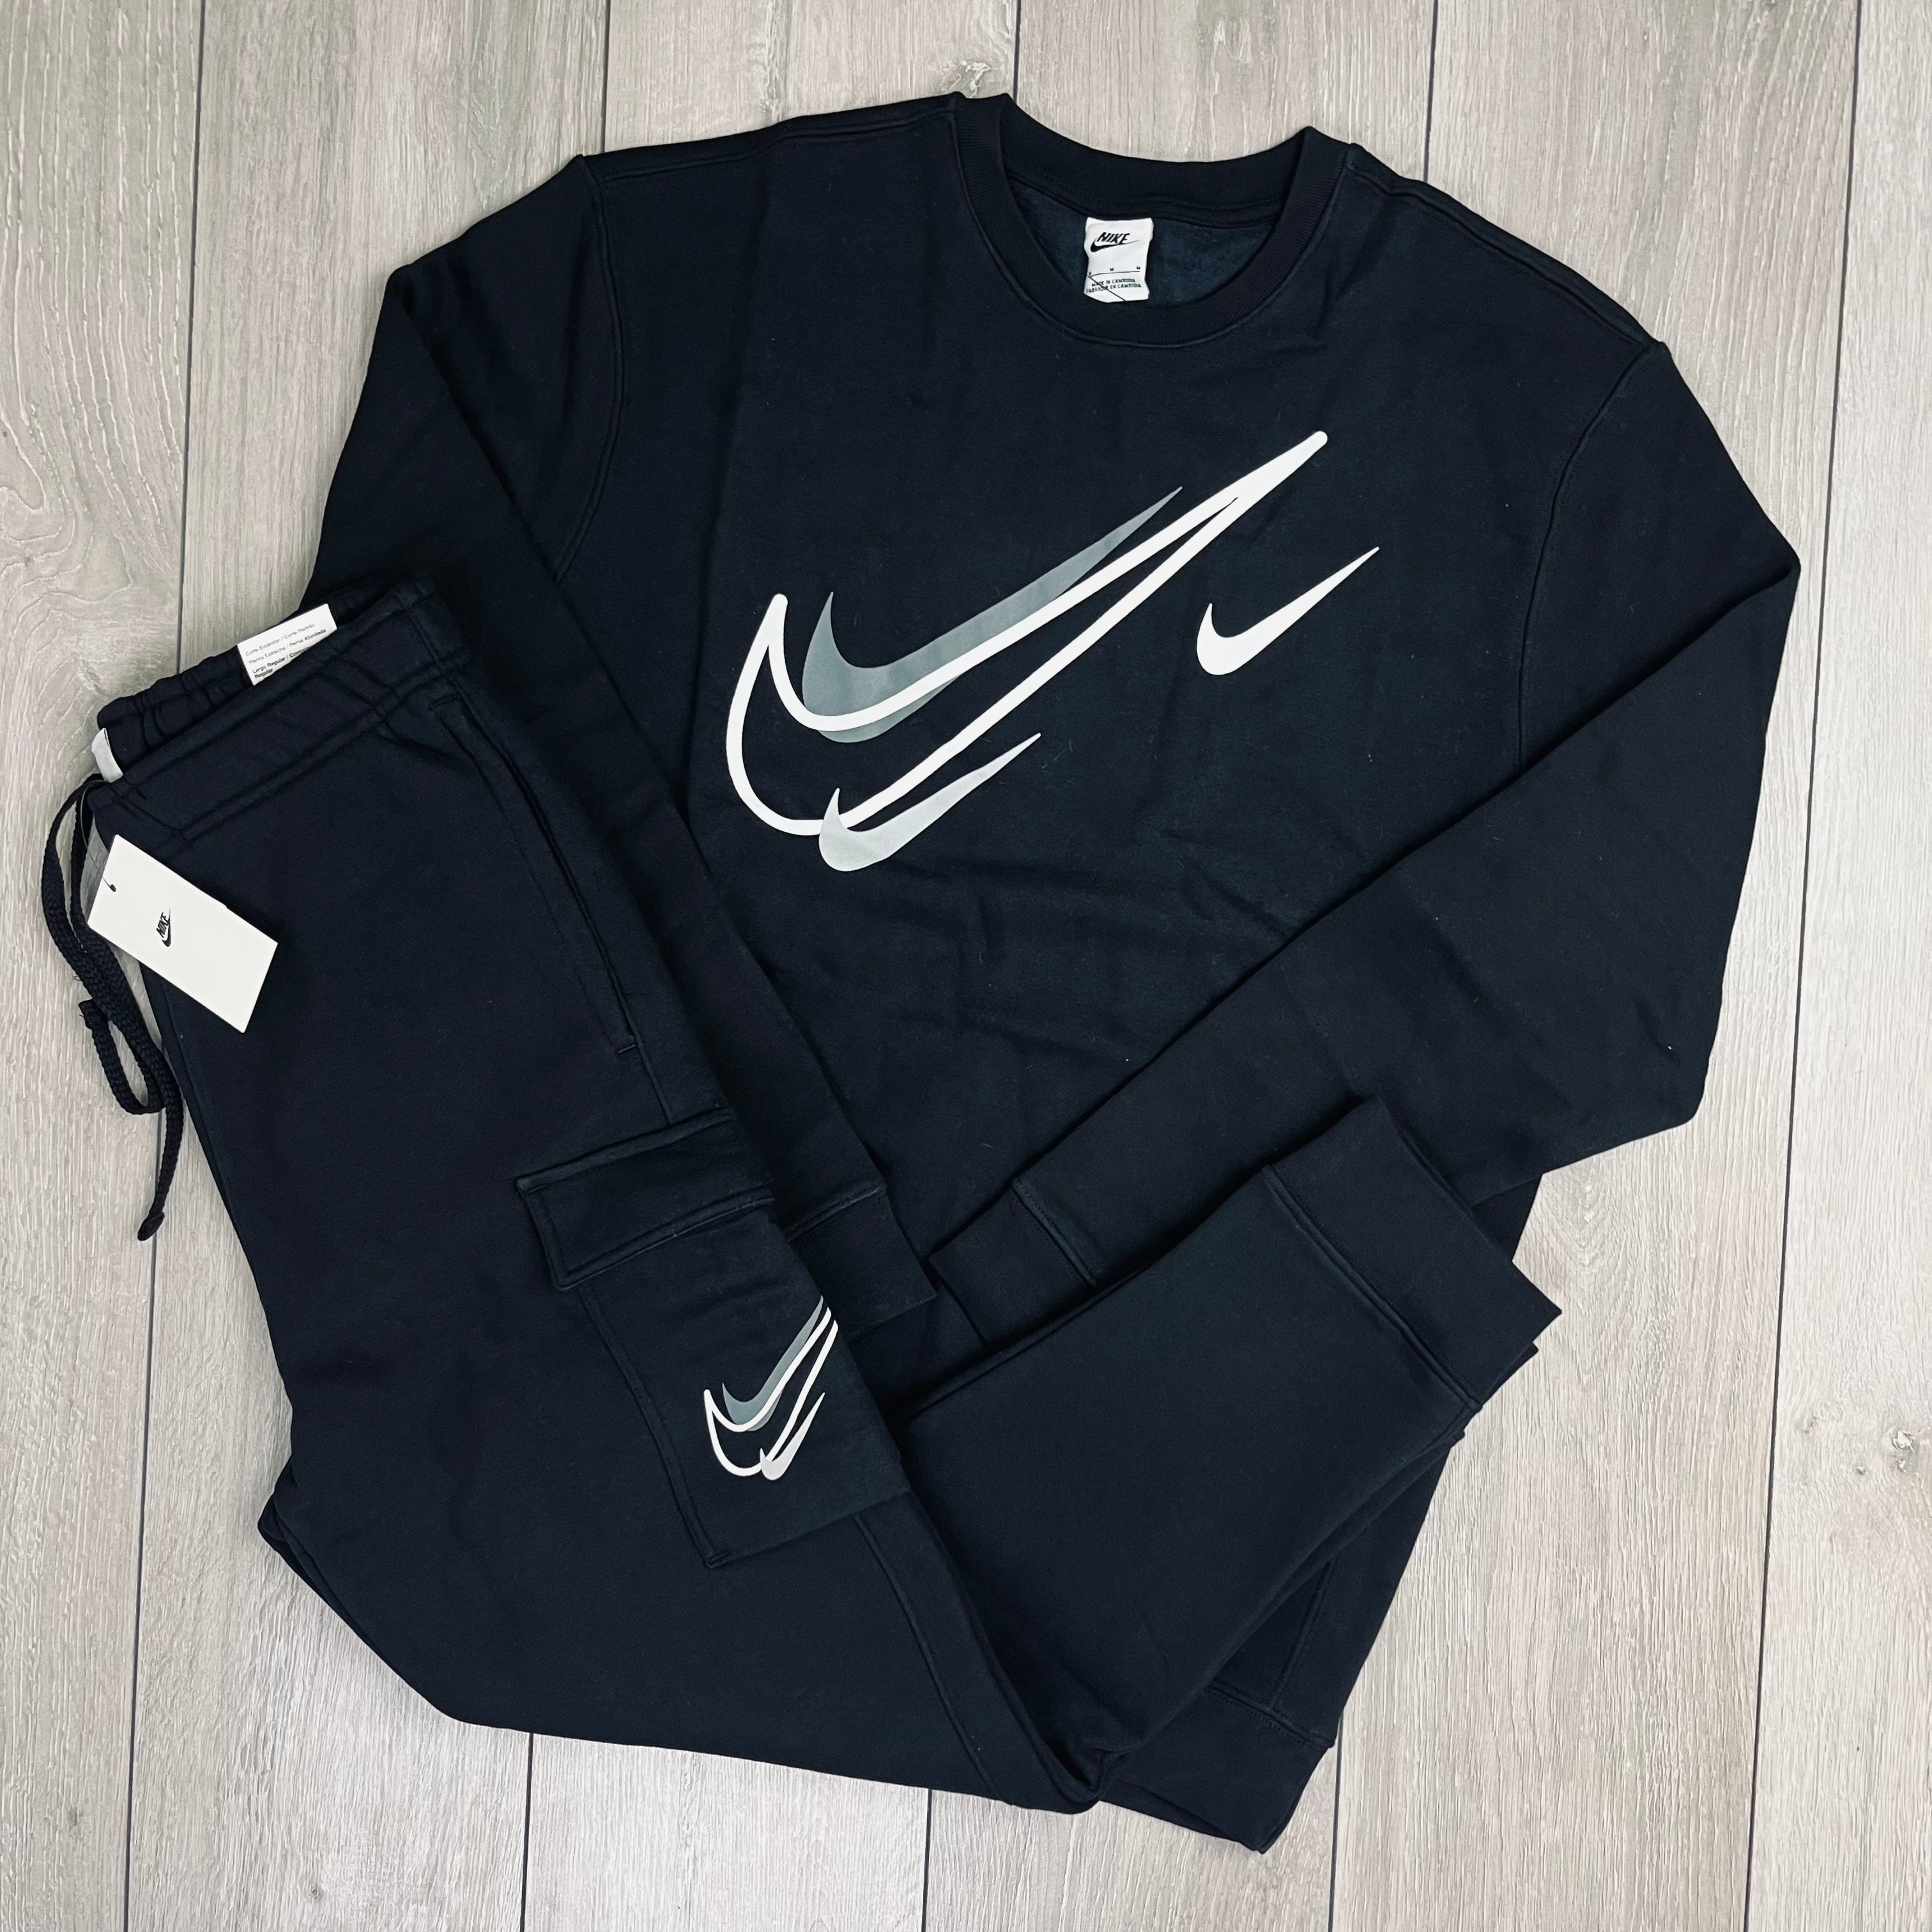 Nike Tracksuit - Black